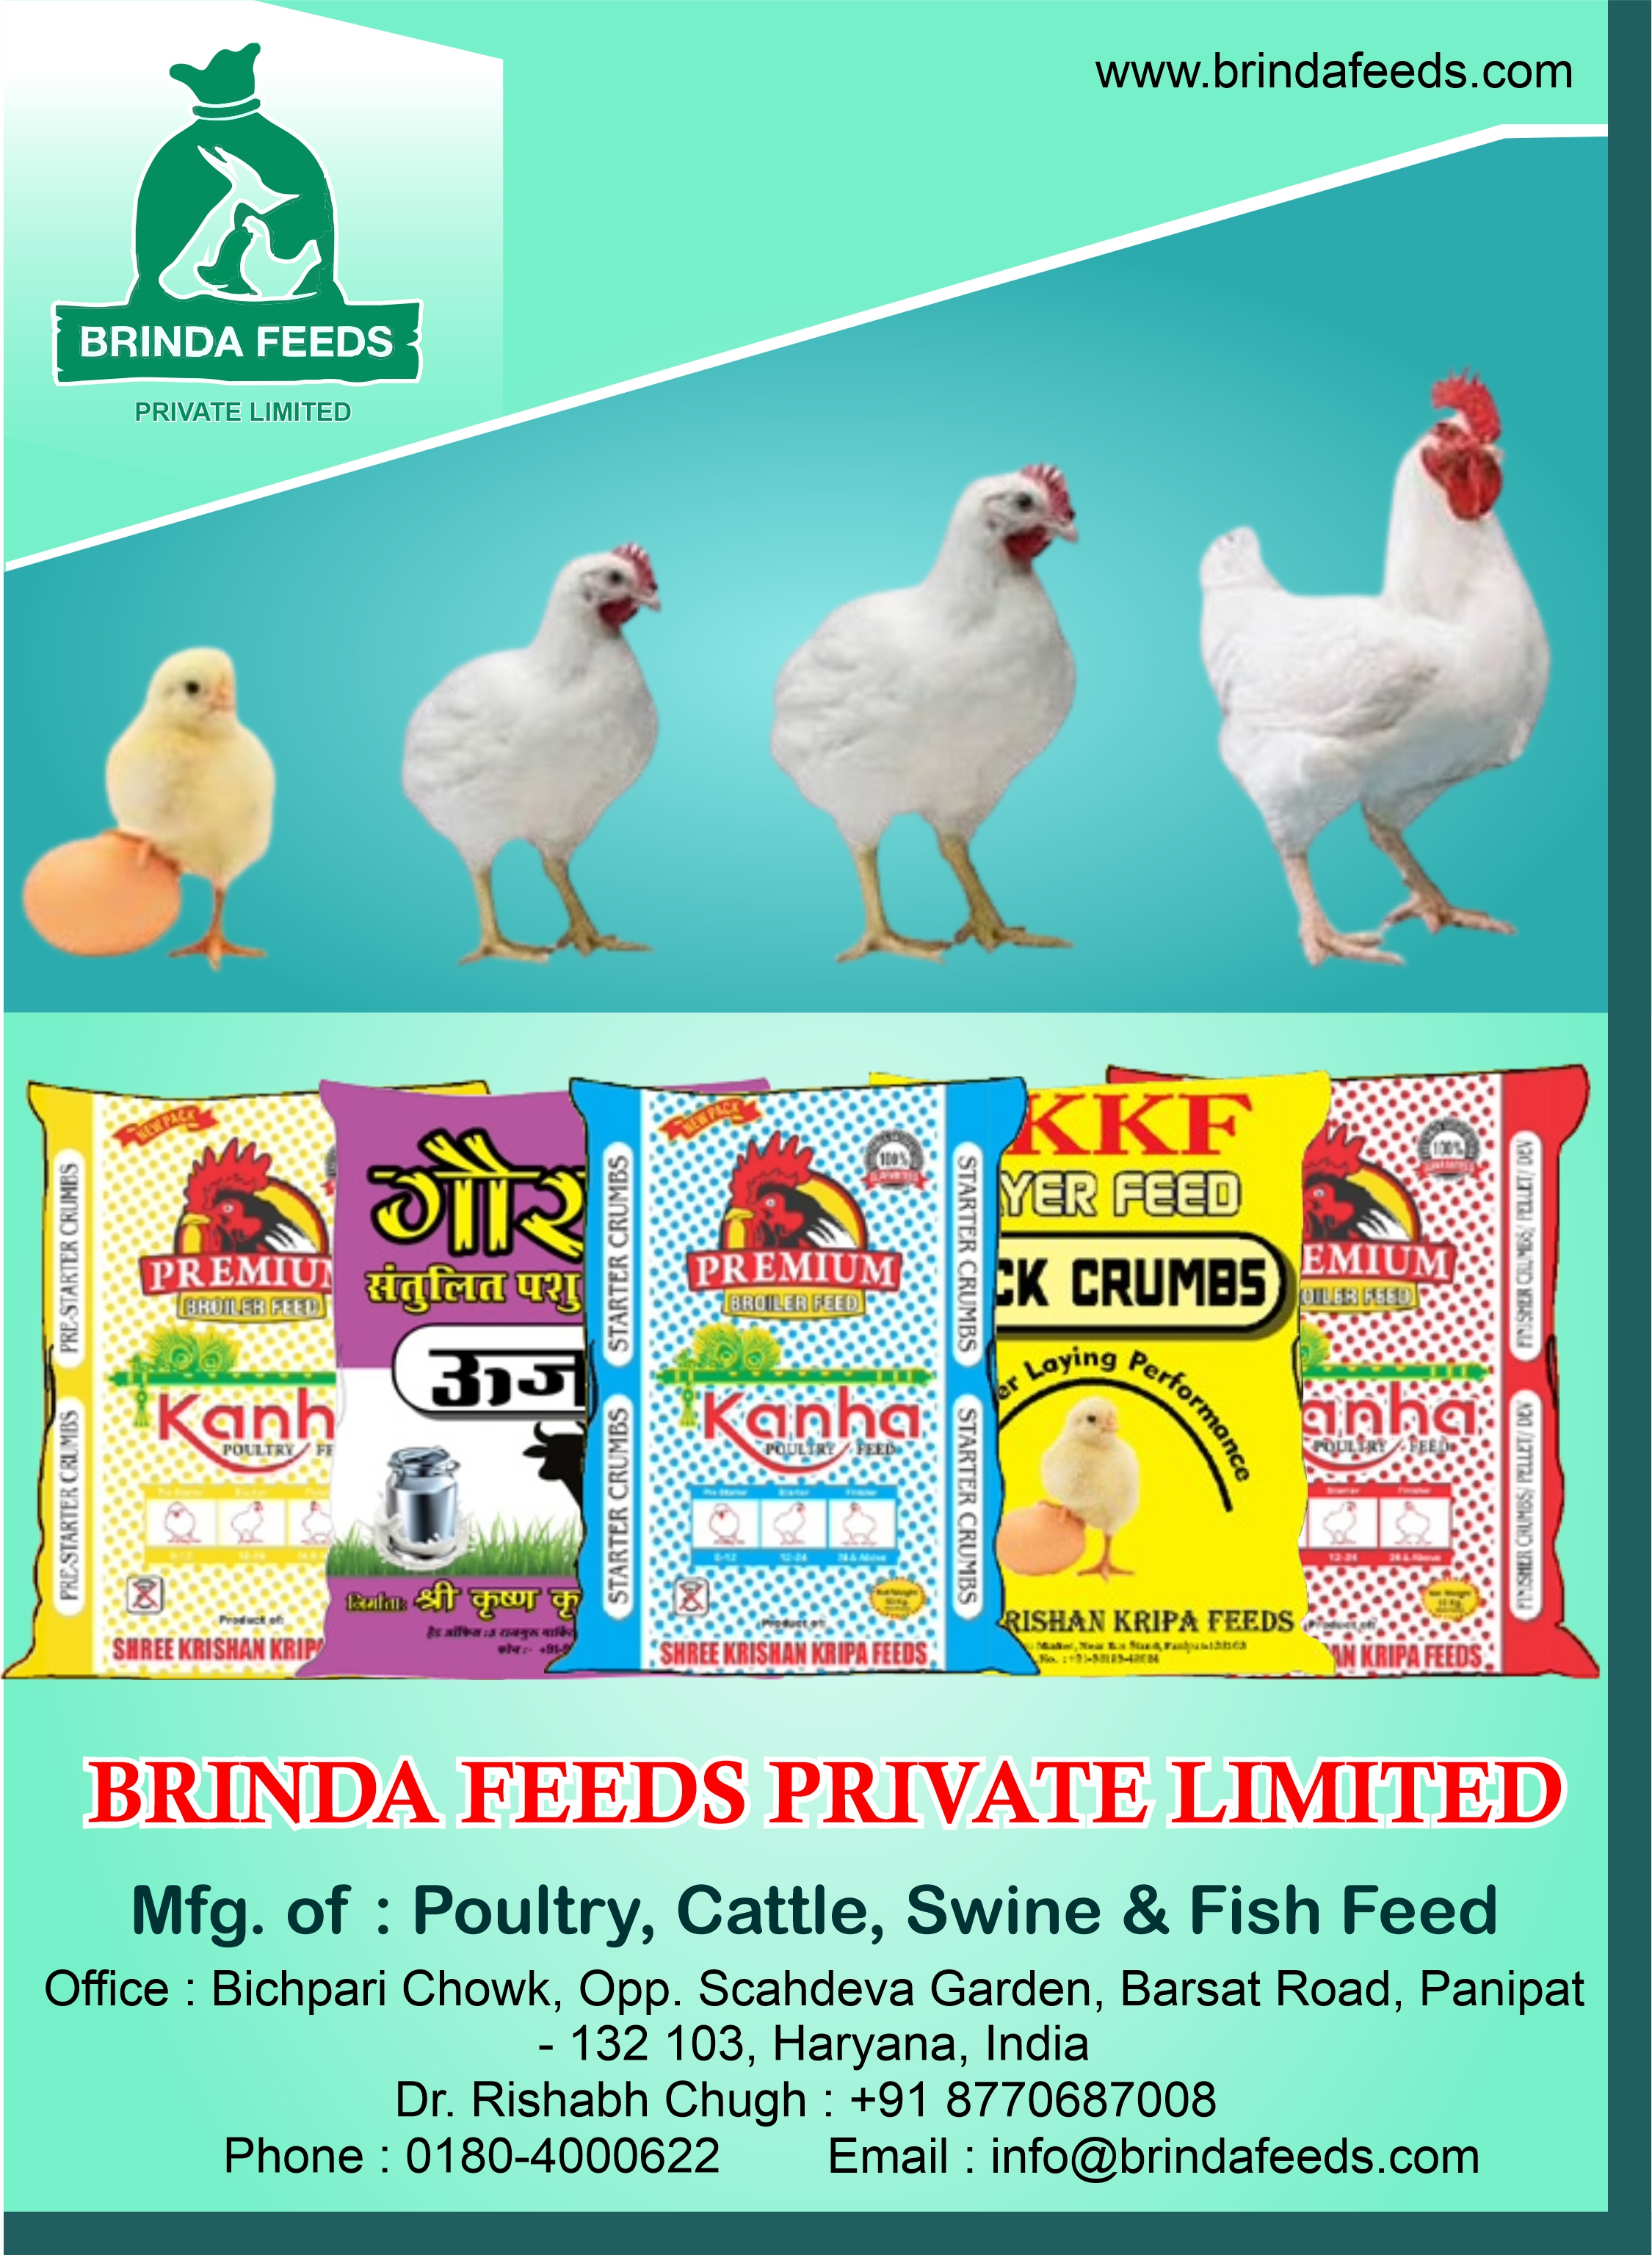 Brinda Feeds Private Limited